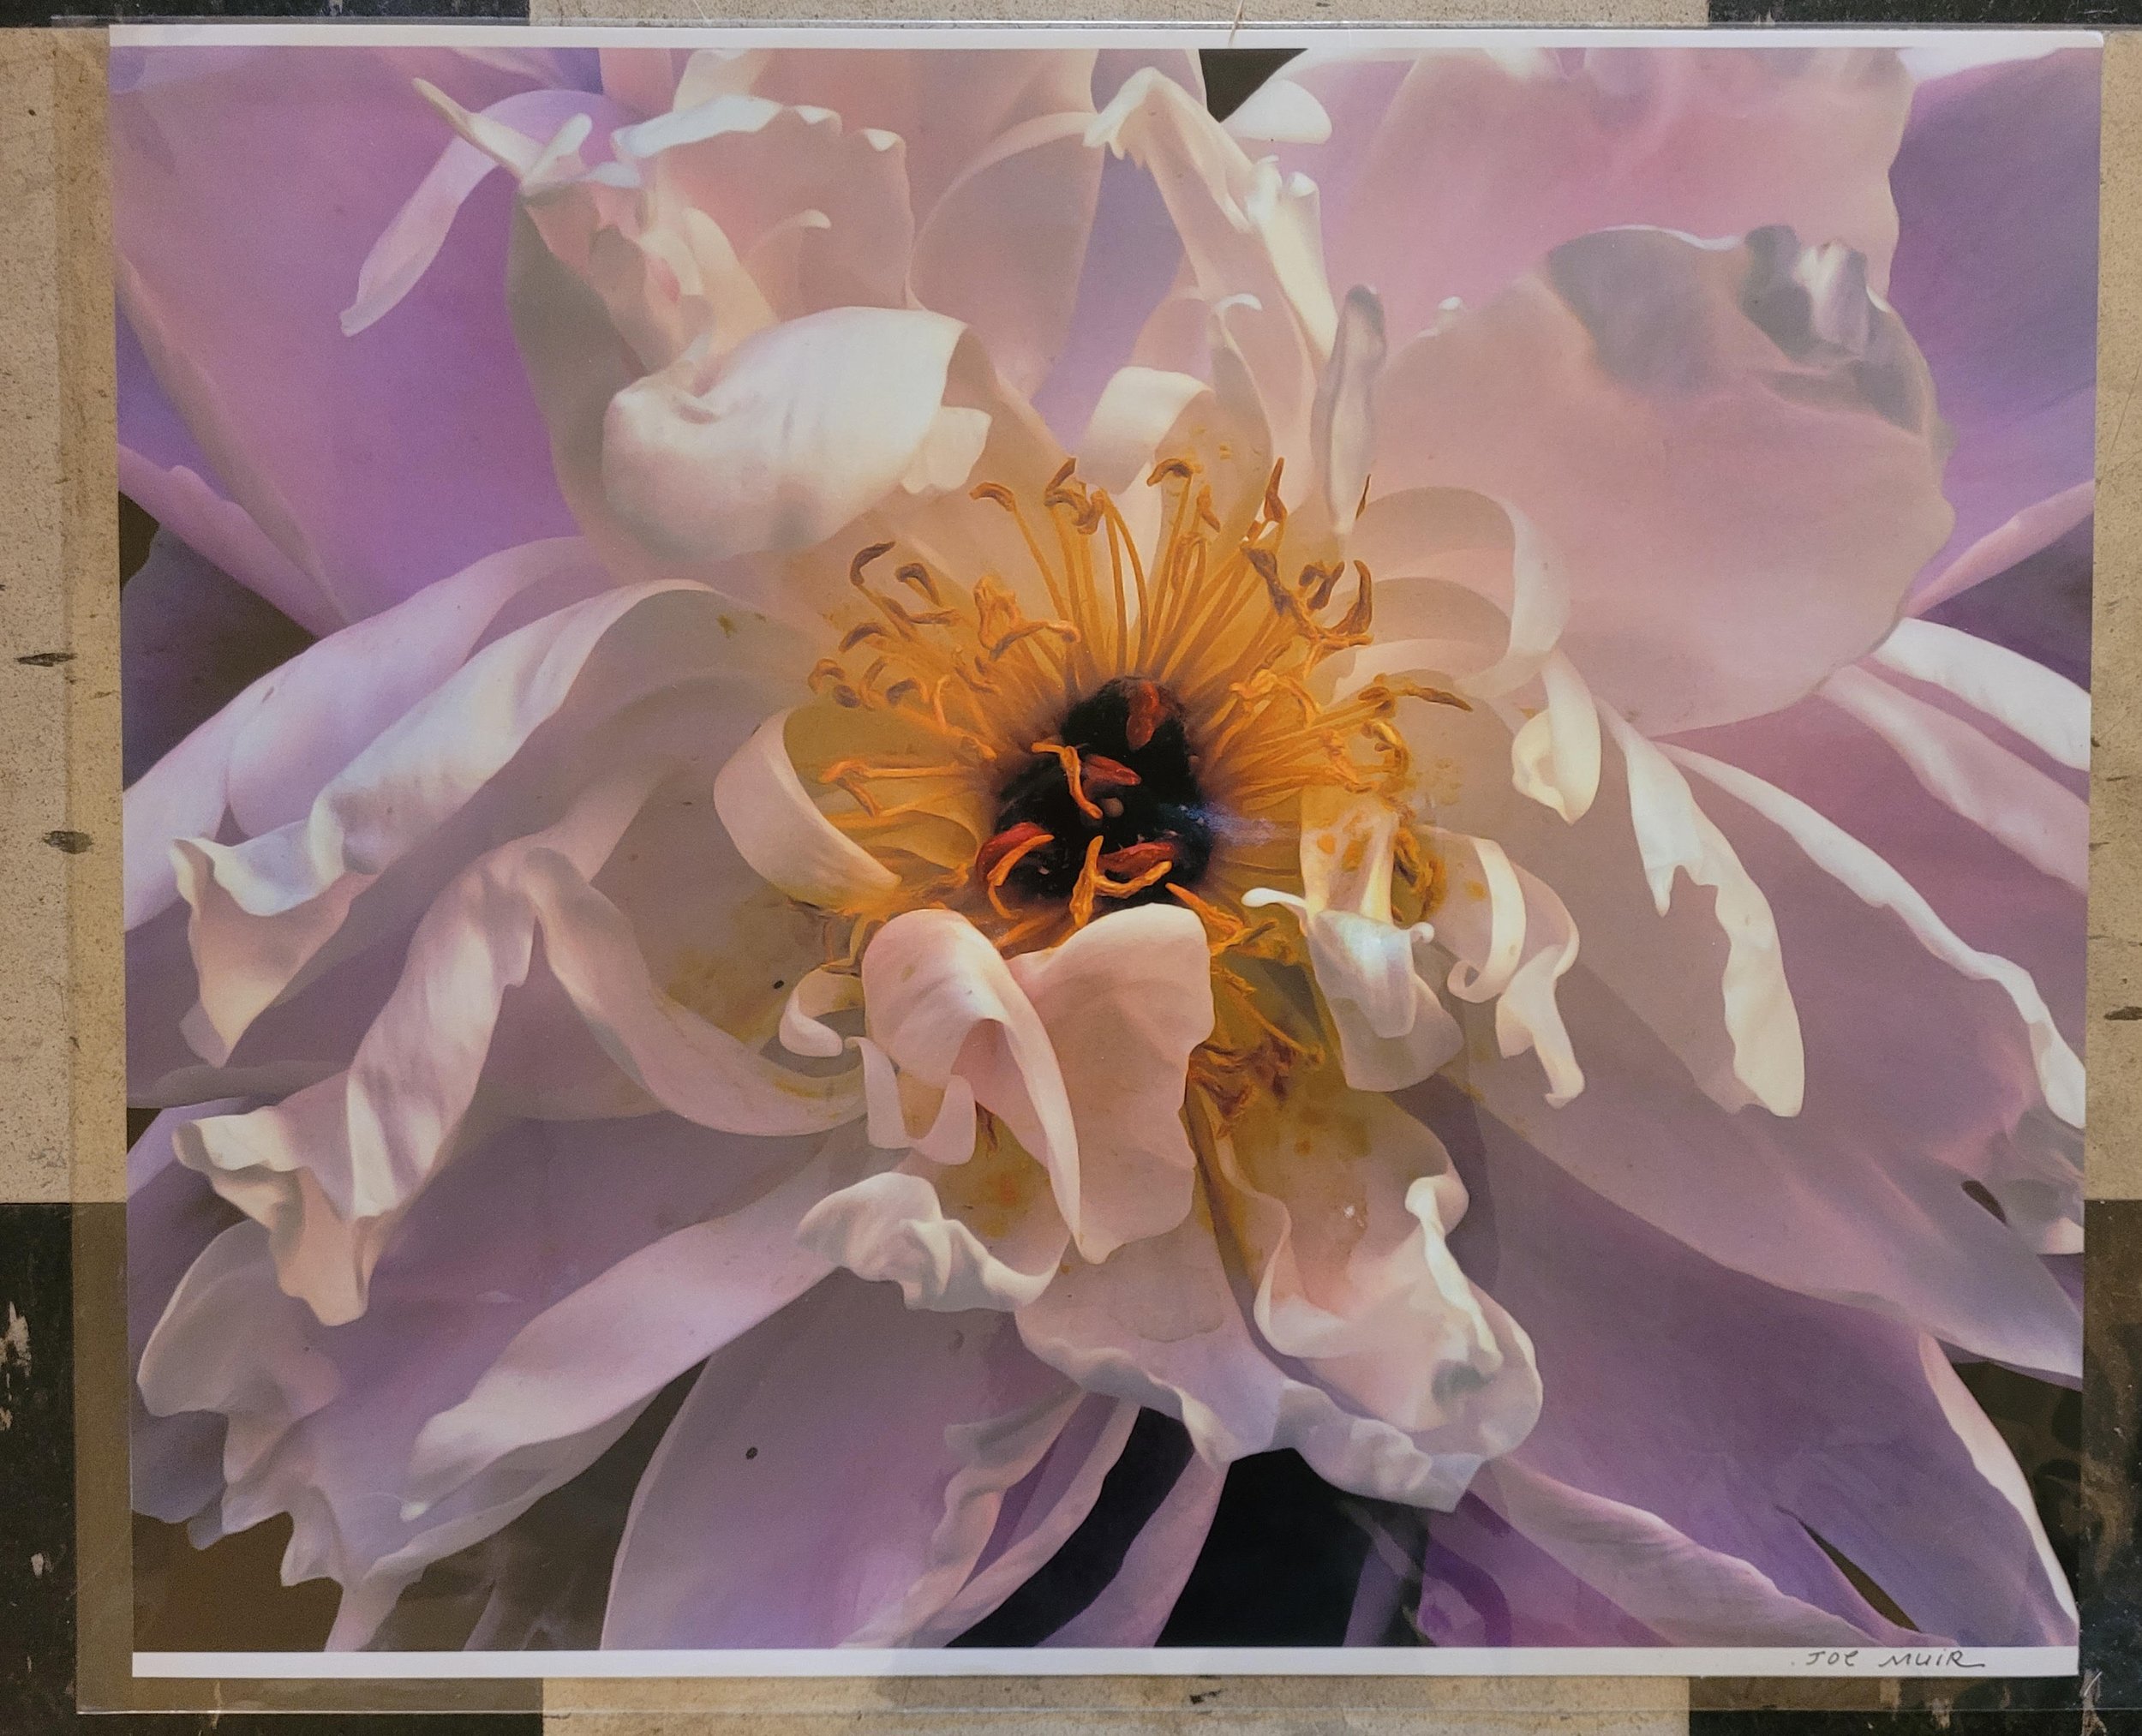  Joe Muir,  # 3,  From the Flower portfolio, 1/3, 2015-2020, Inkjet prints, 16 x 20 inches, $950. each (framed) 